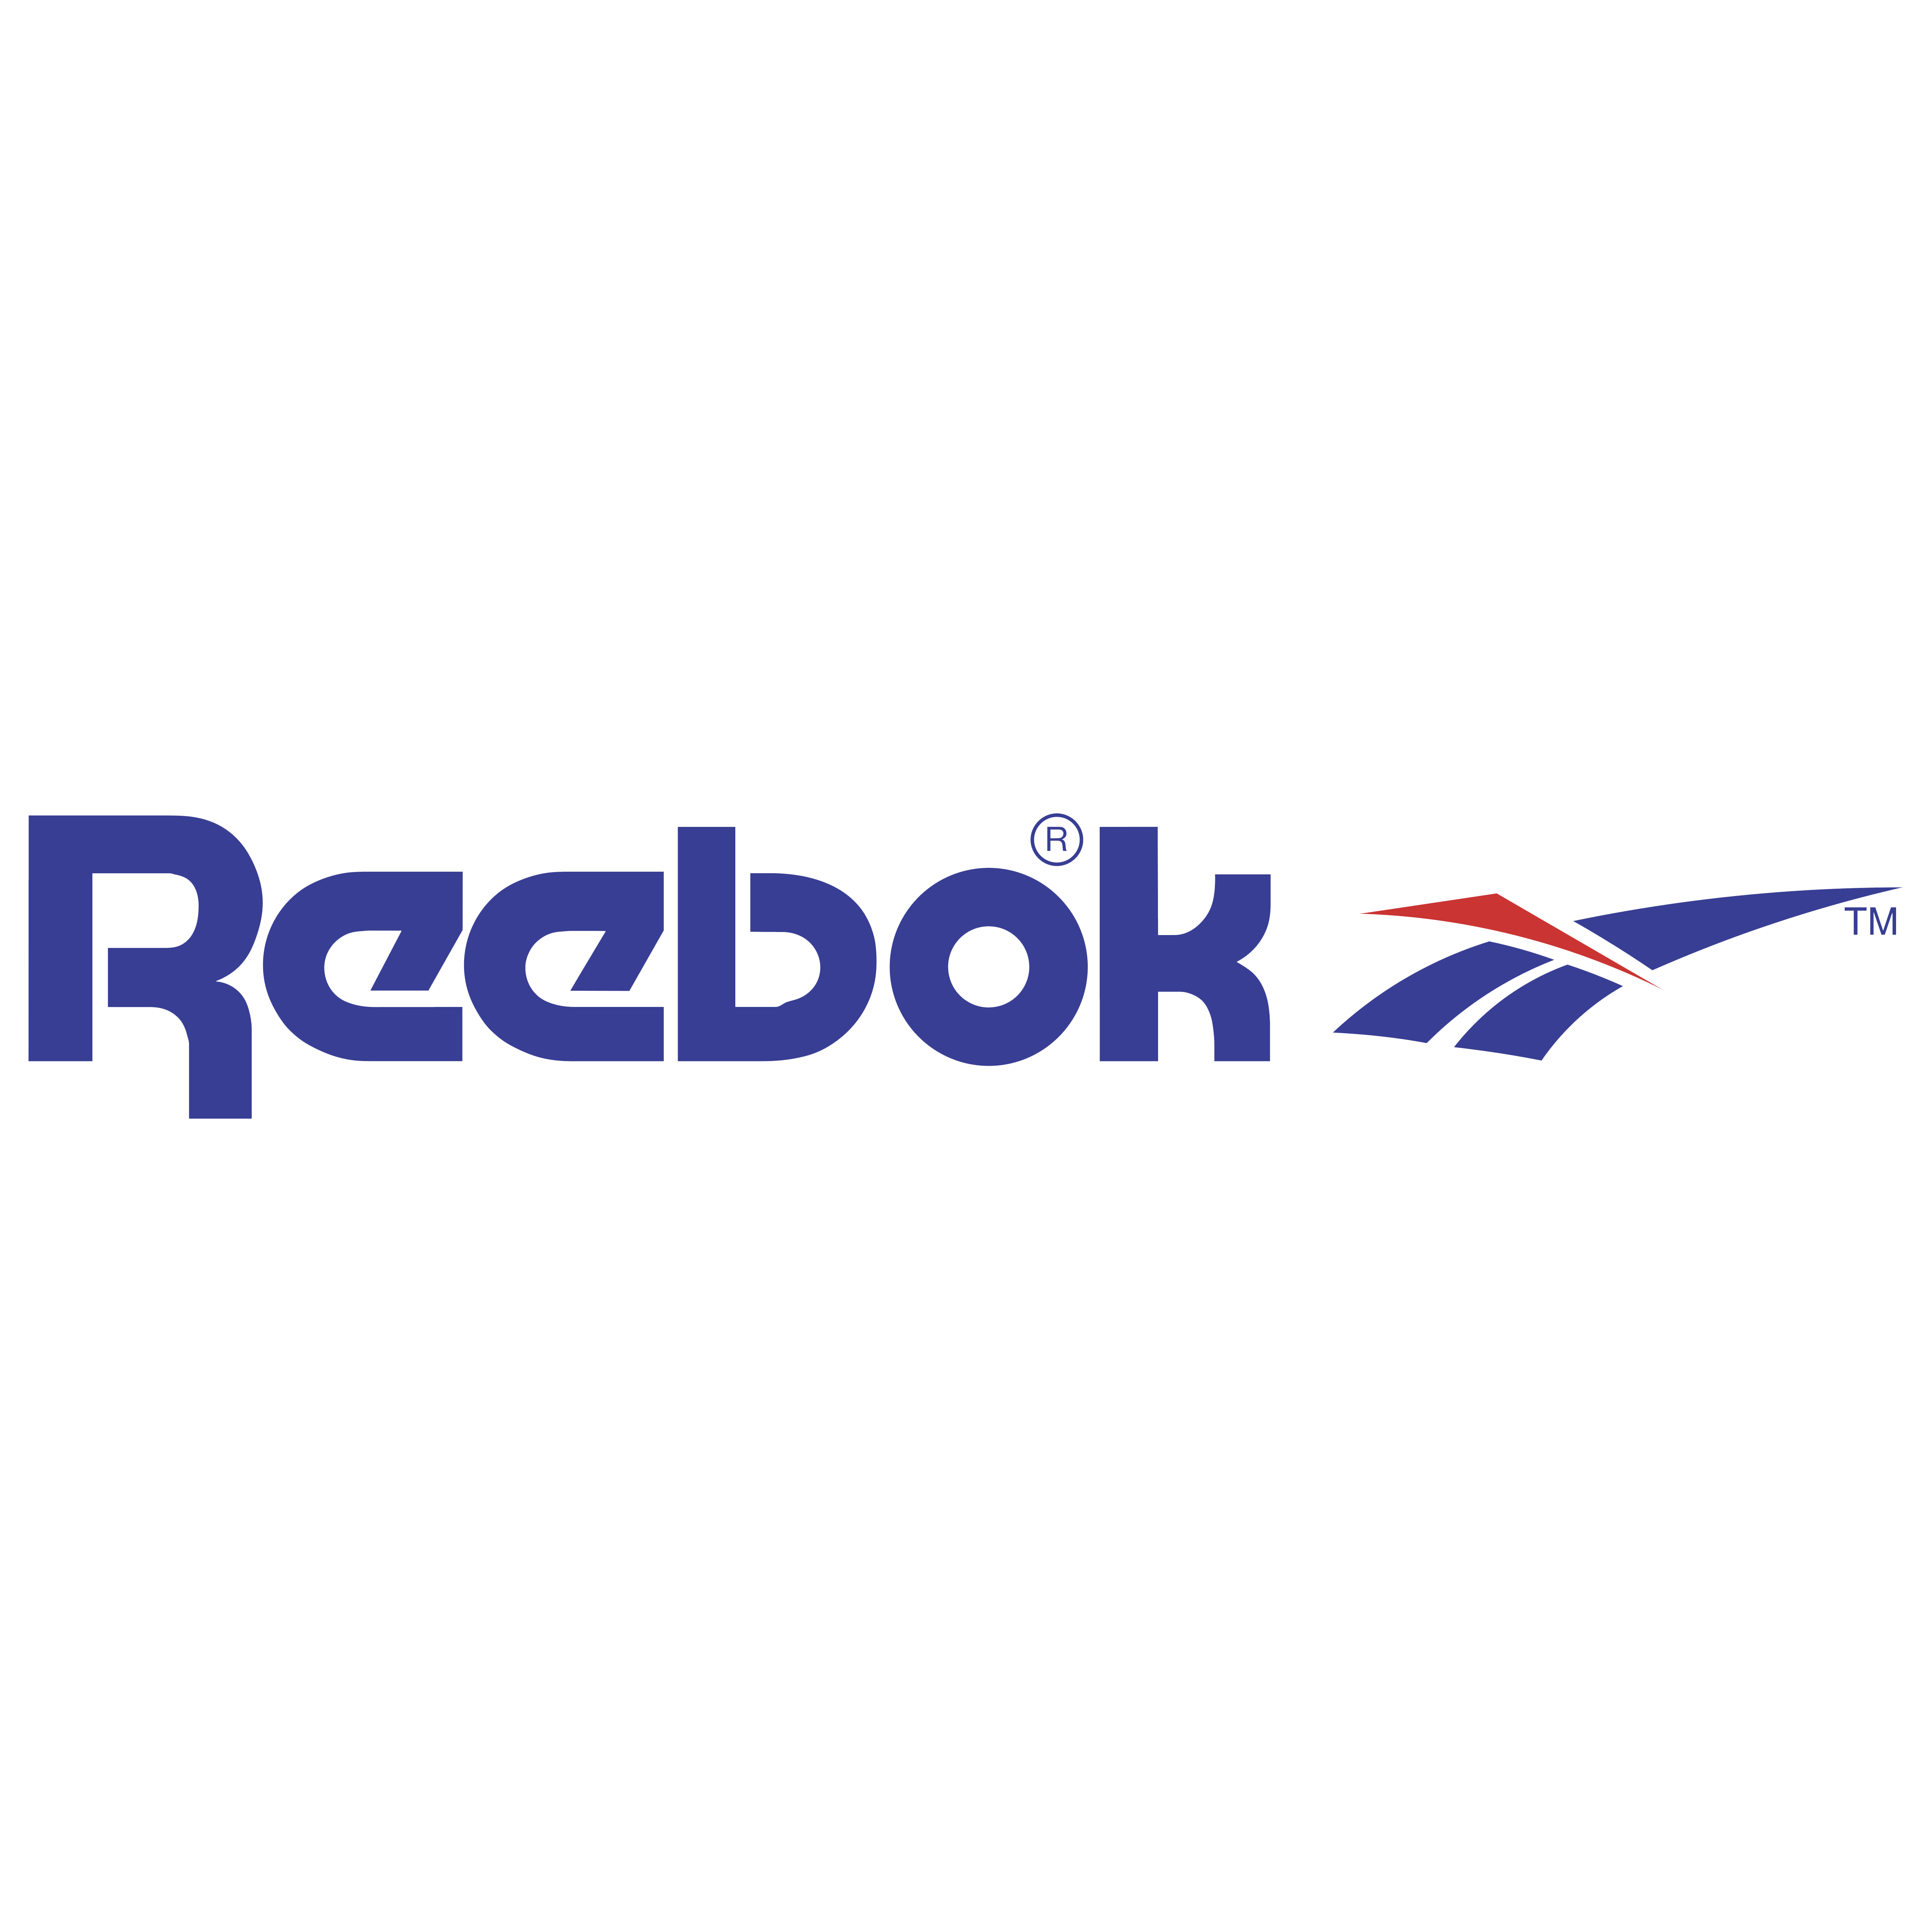 Reebok Logo Transparent Picture